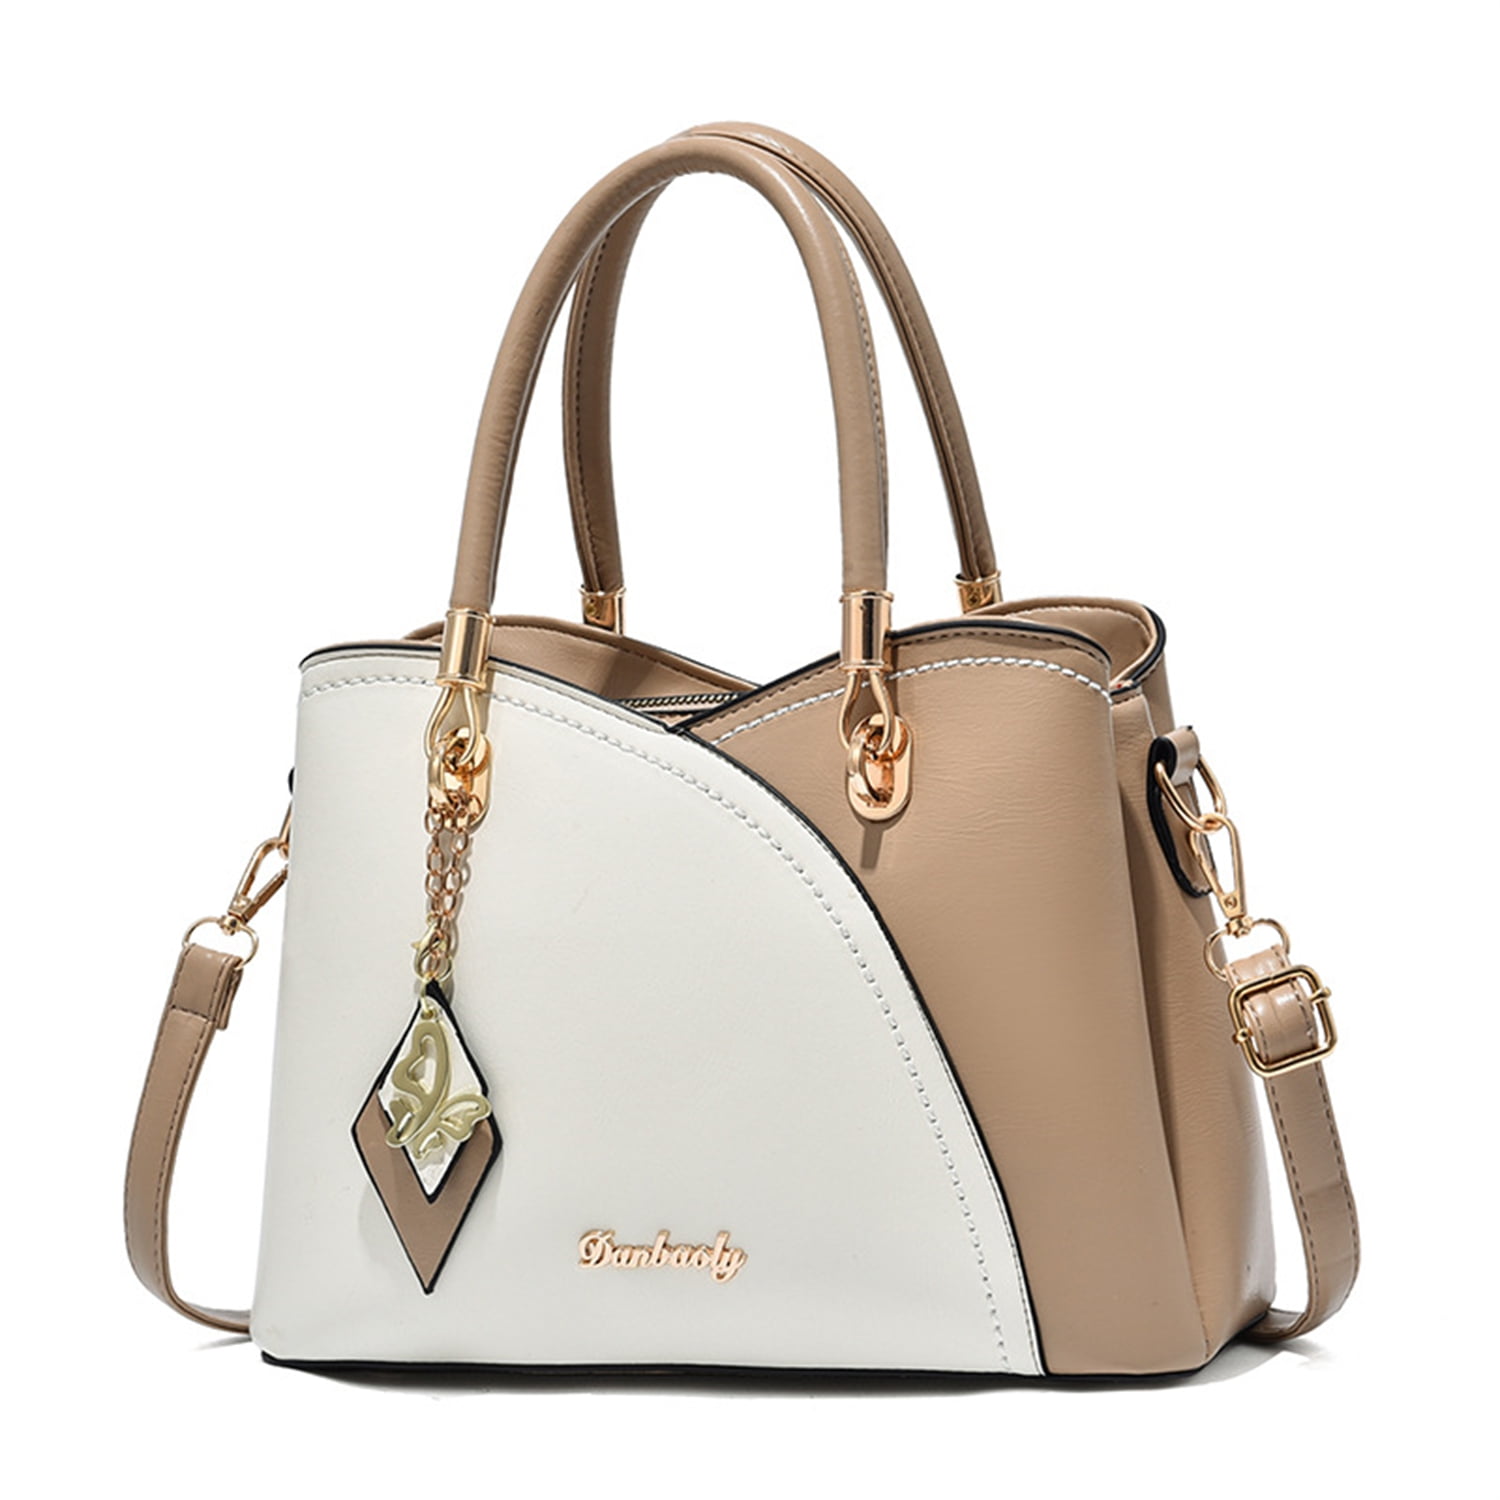 Ladies Hand Bags Online | Buy Amazon - YouTube